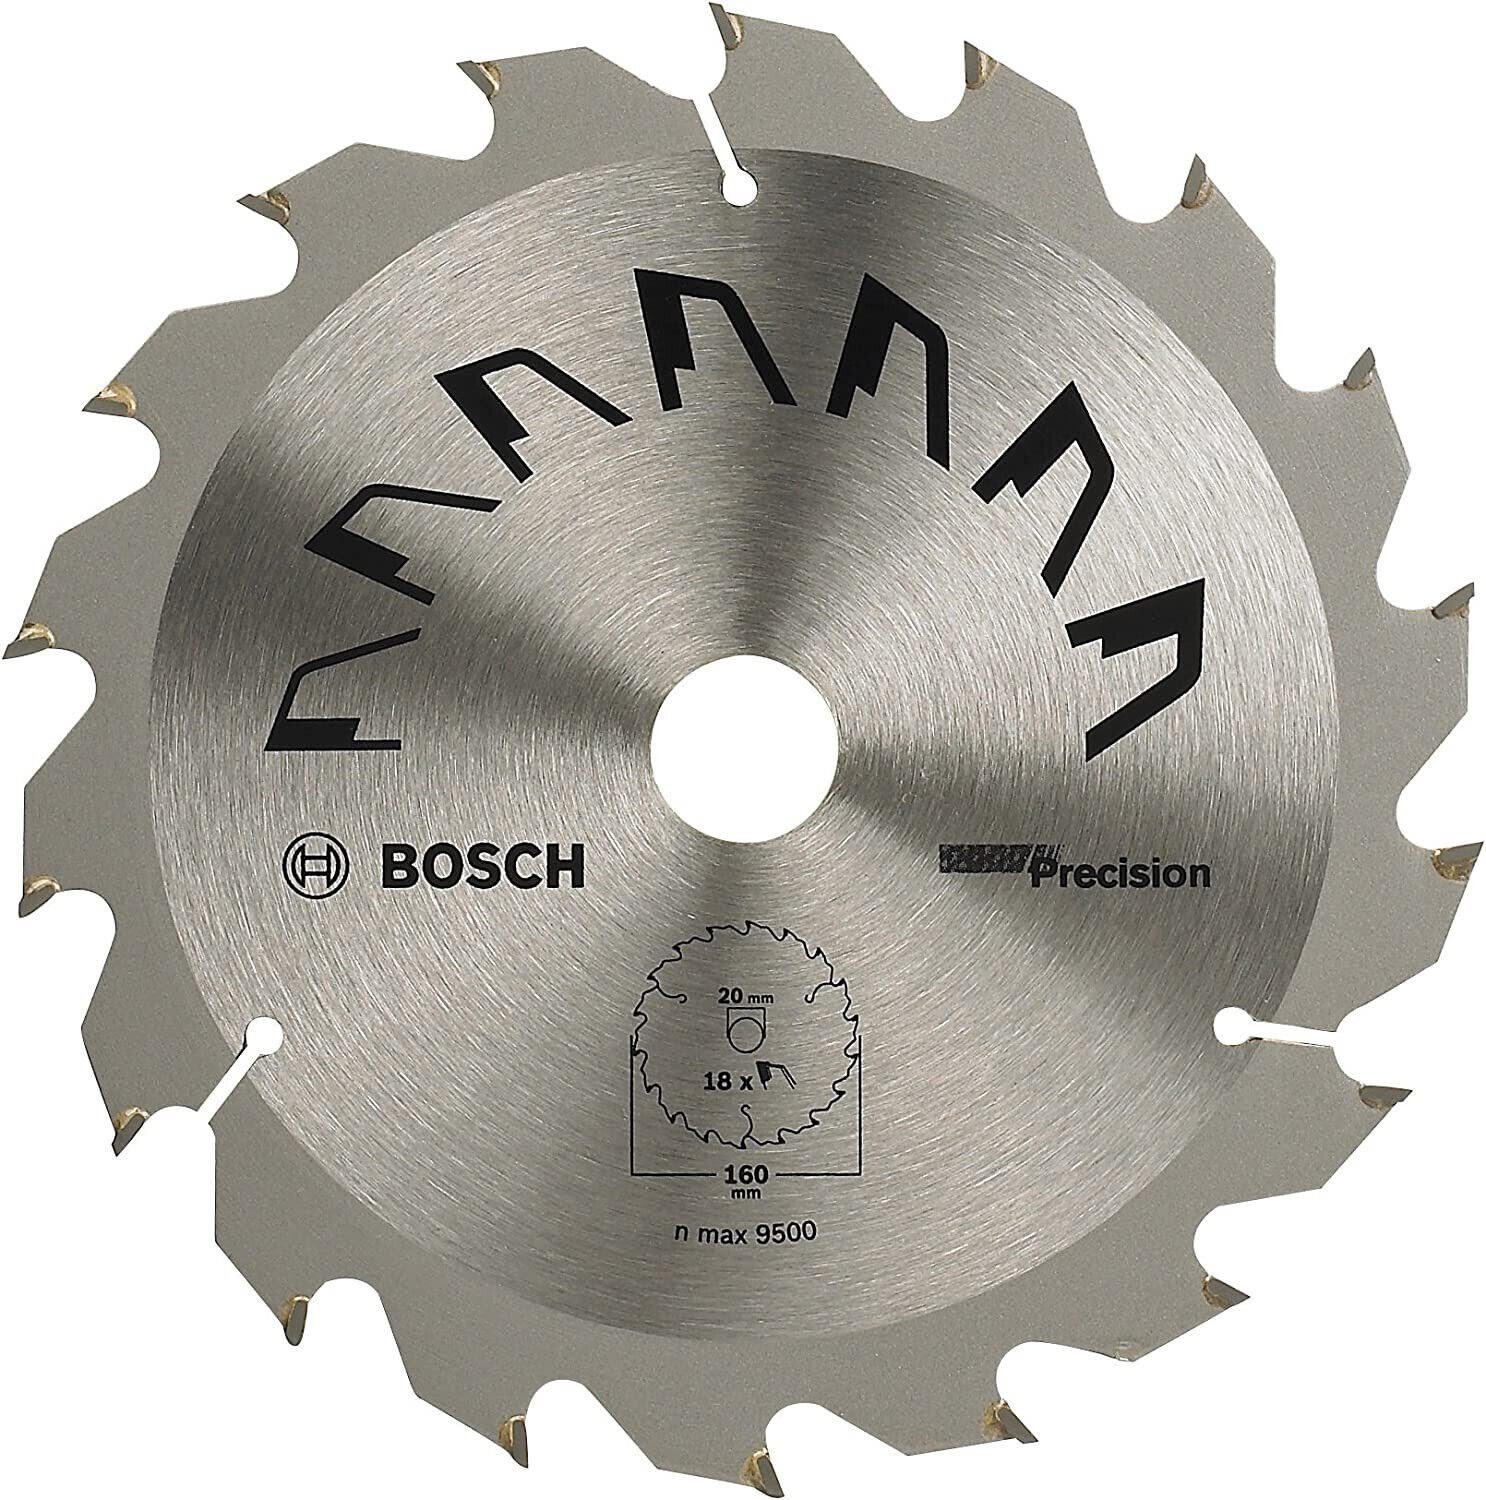 BOSCH Bohrfutter Bosch 2609256855 Kreissägeblatt 2 160 Precision 20/16 x x Z18 Sägebla